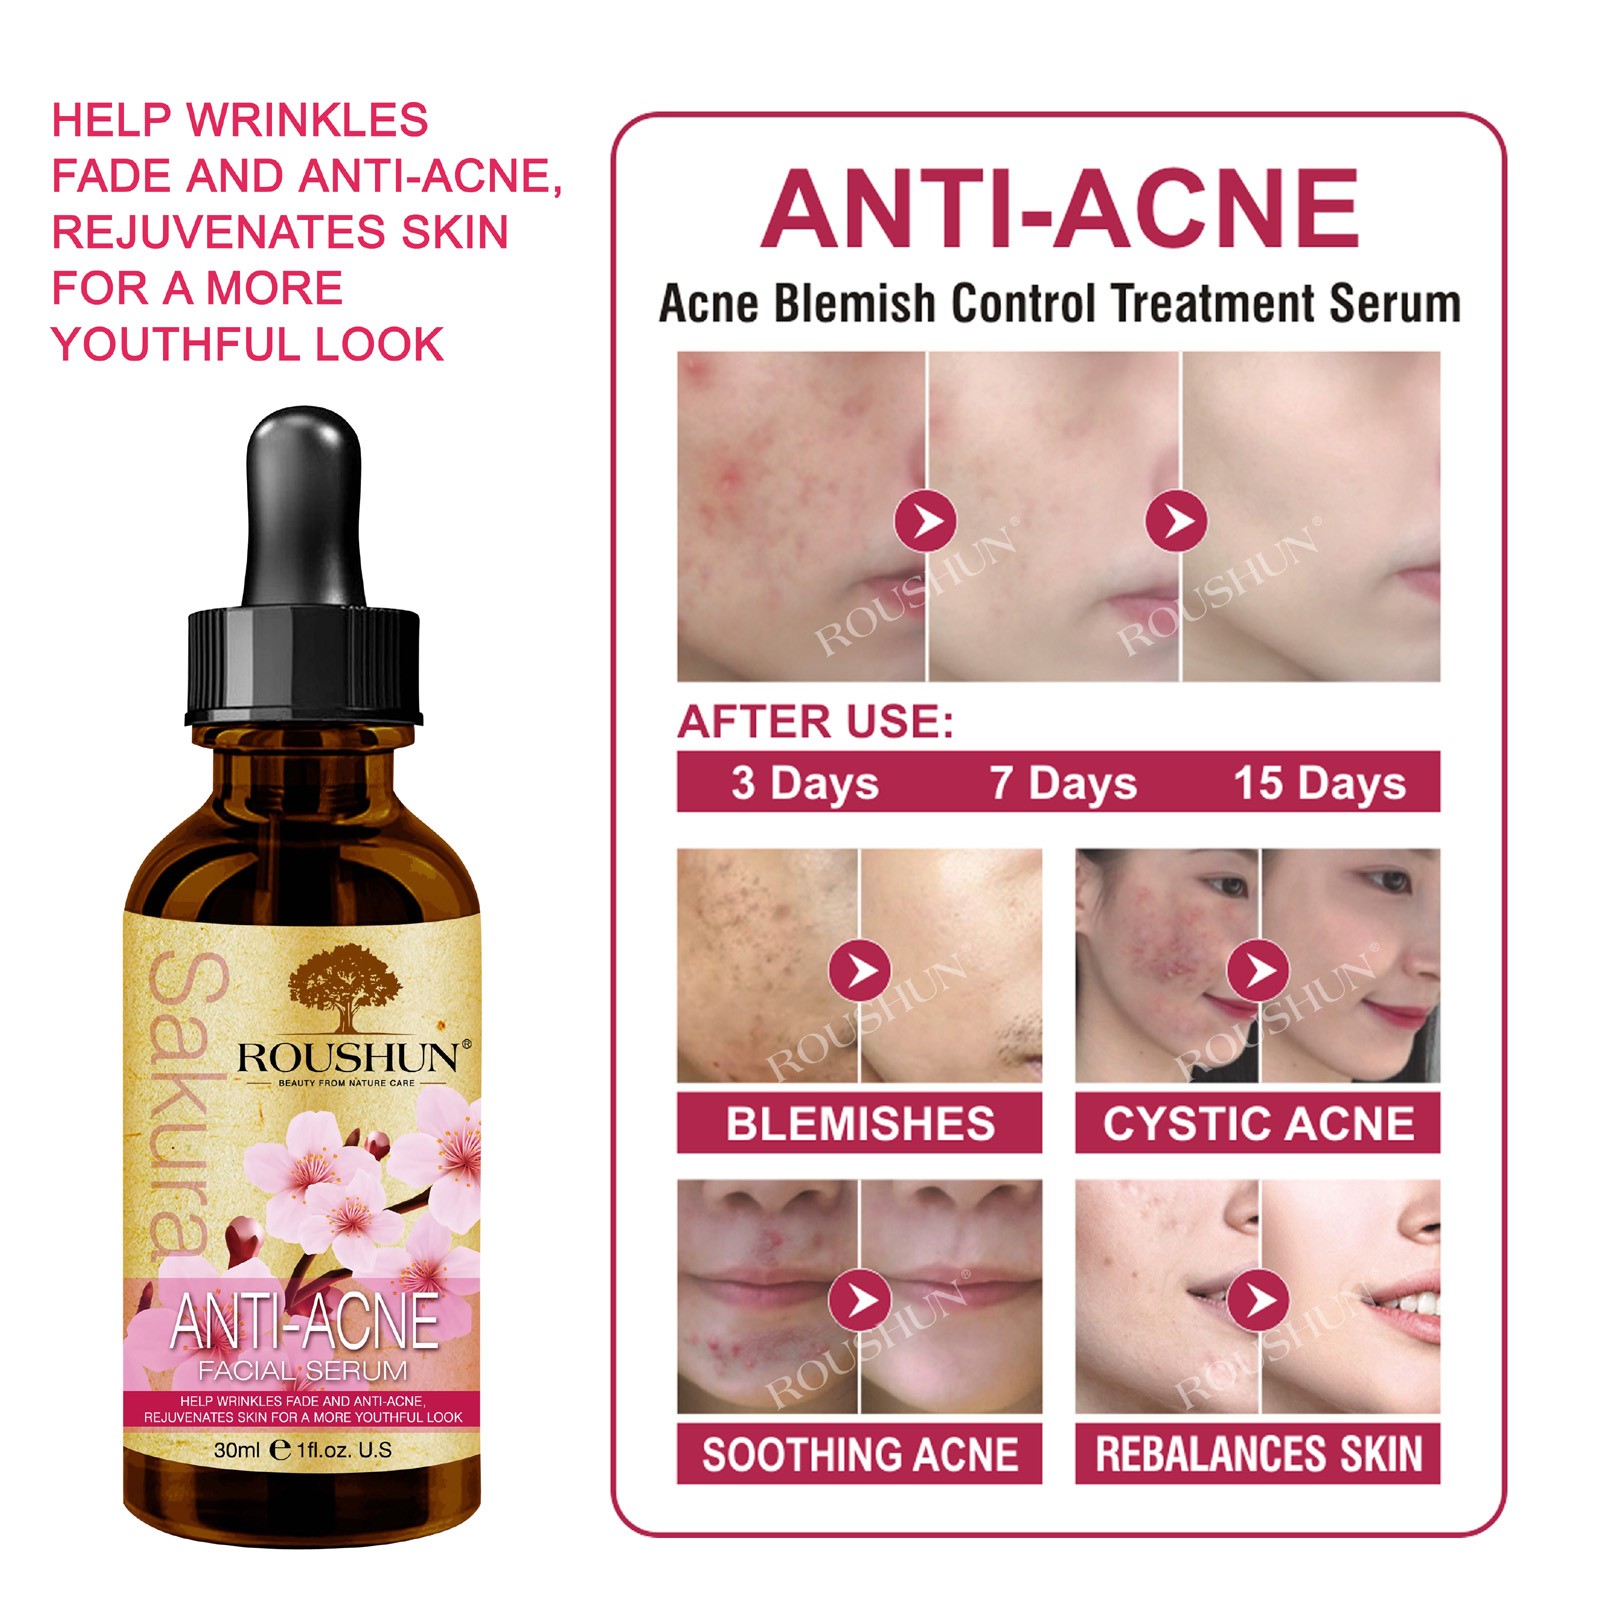 ROUSHUN Sakura Anti-Acne Facial Serum Help Wrinkles Fade And Anti-Acne Rejuvenates Skin 